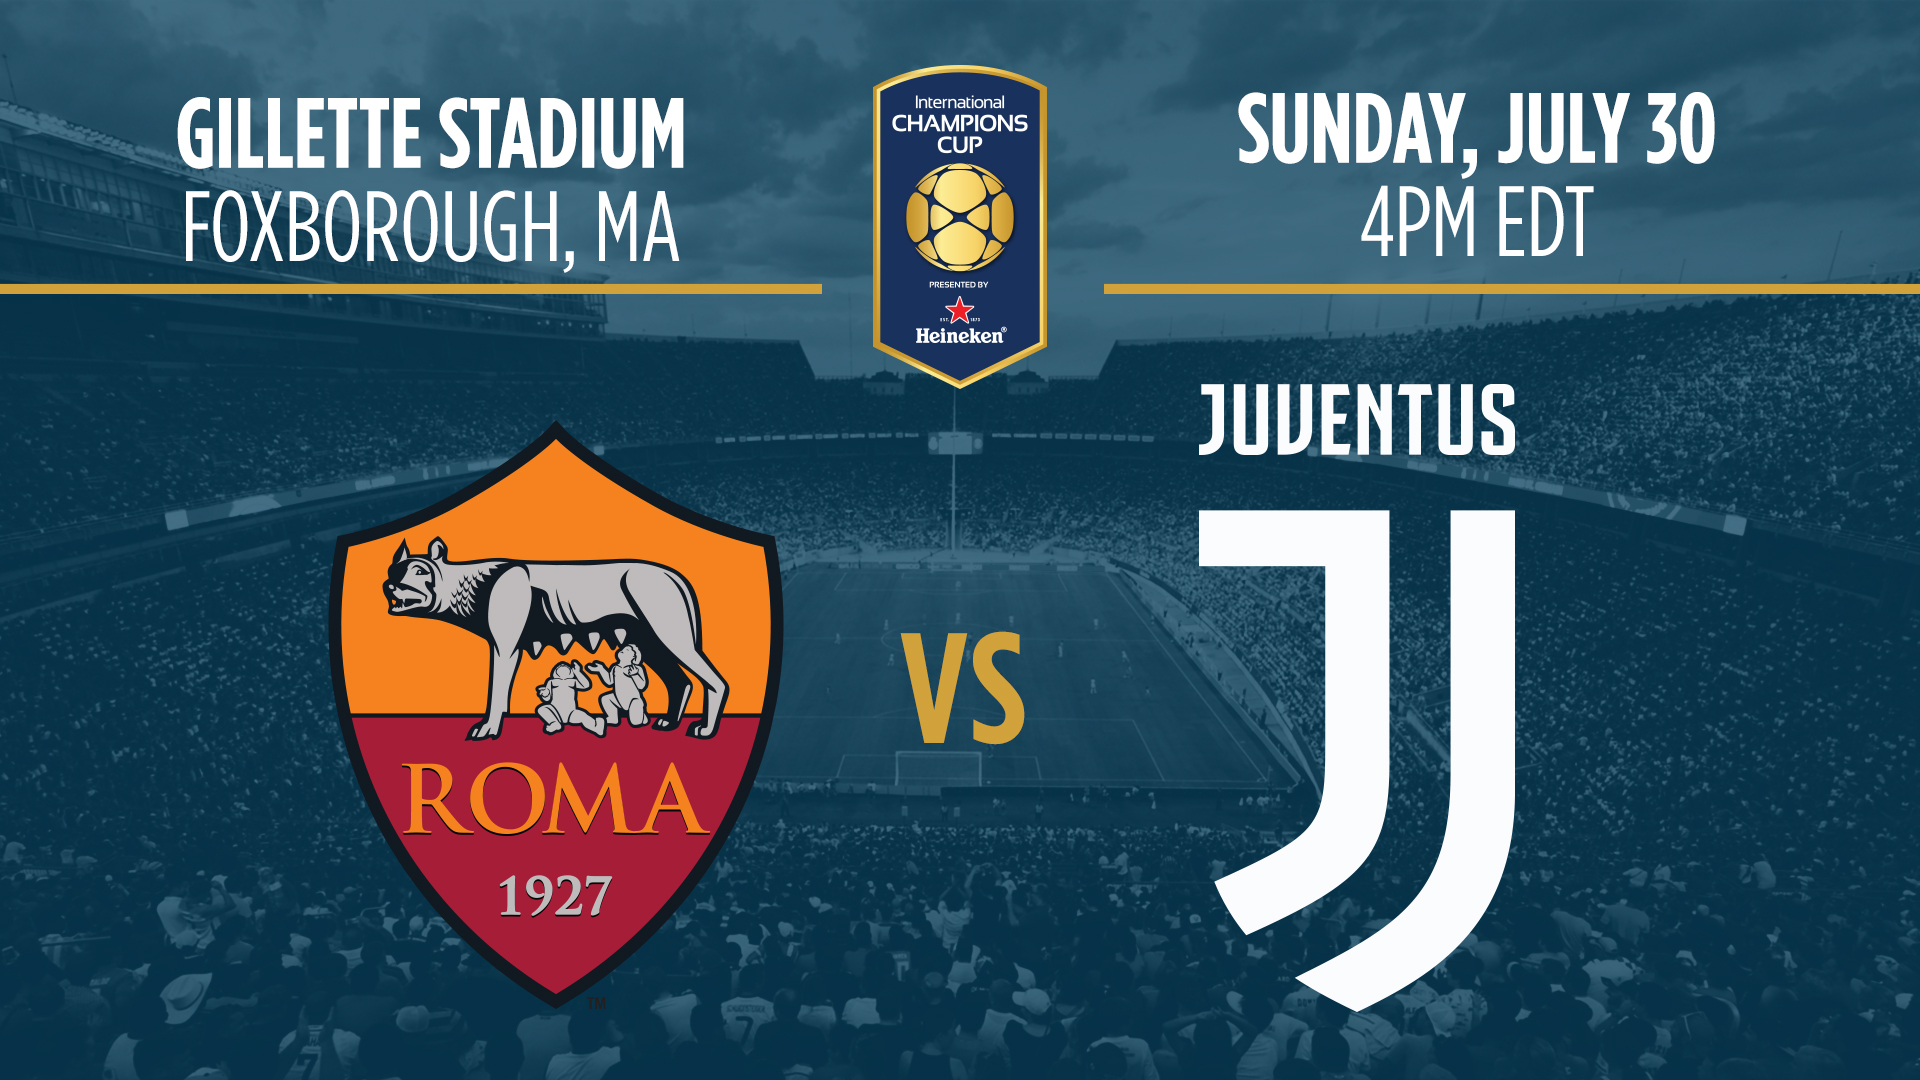 International Champions Cup: AS Roma vs Juventus [07/30/17]